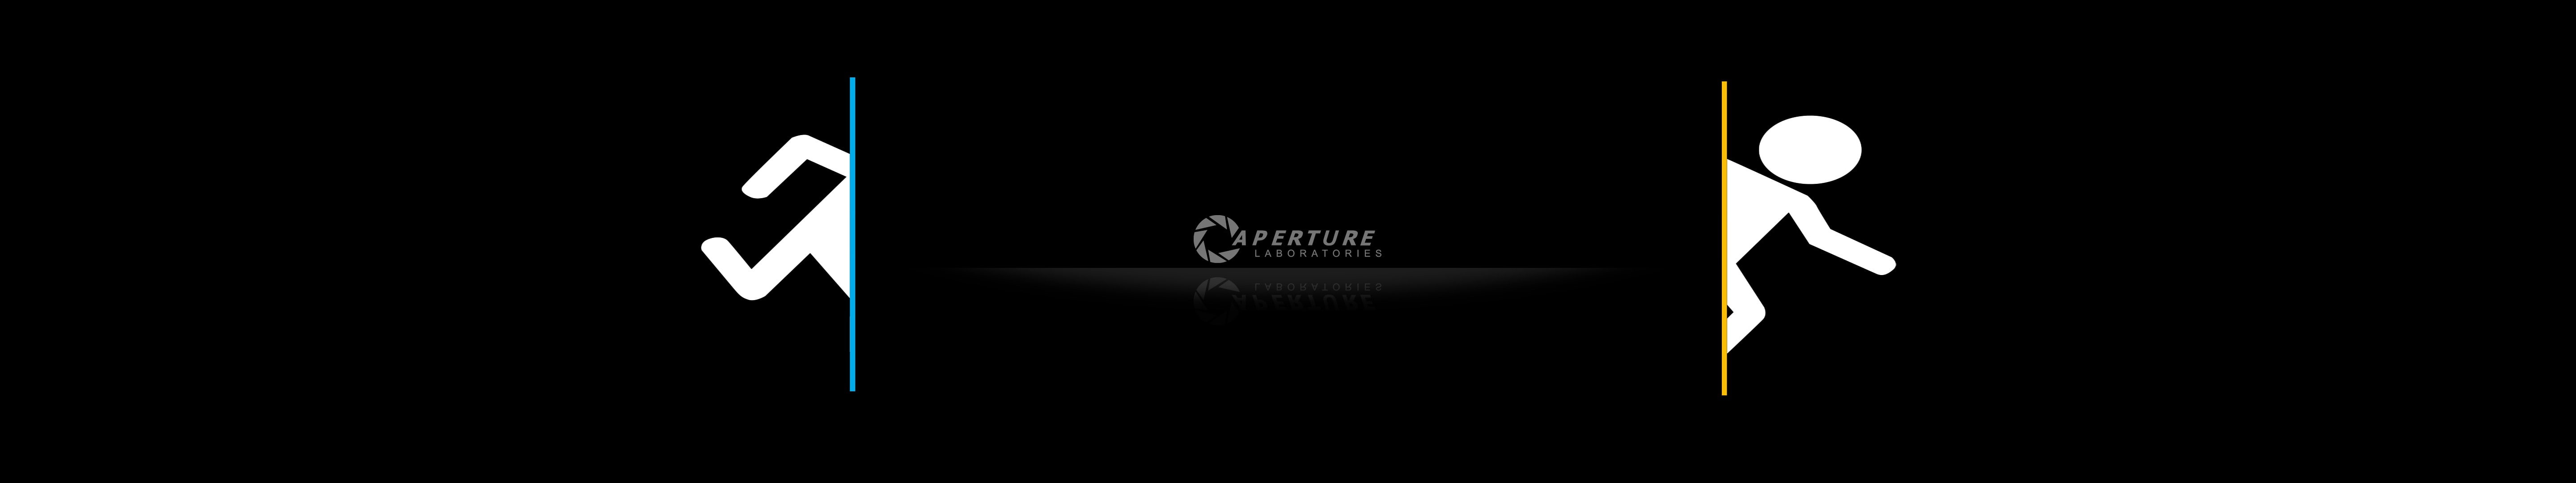 Portal 2, triple screen, Aperture Laboratories, Portal (game)